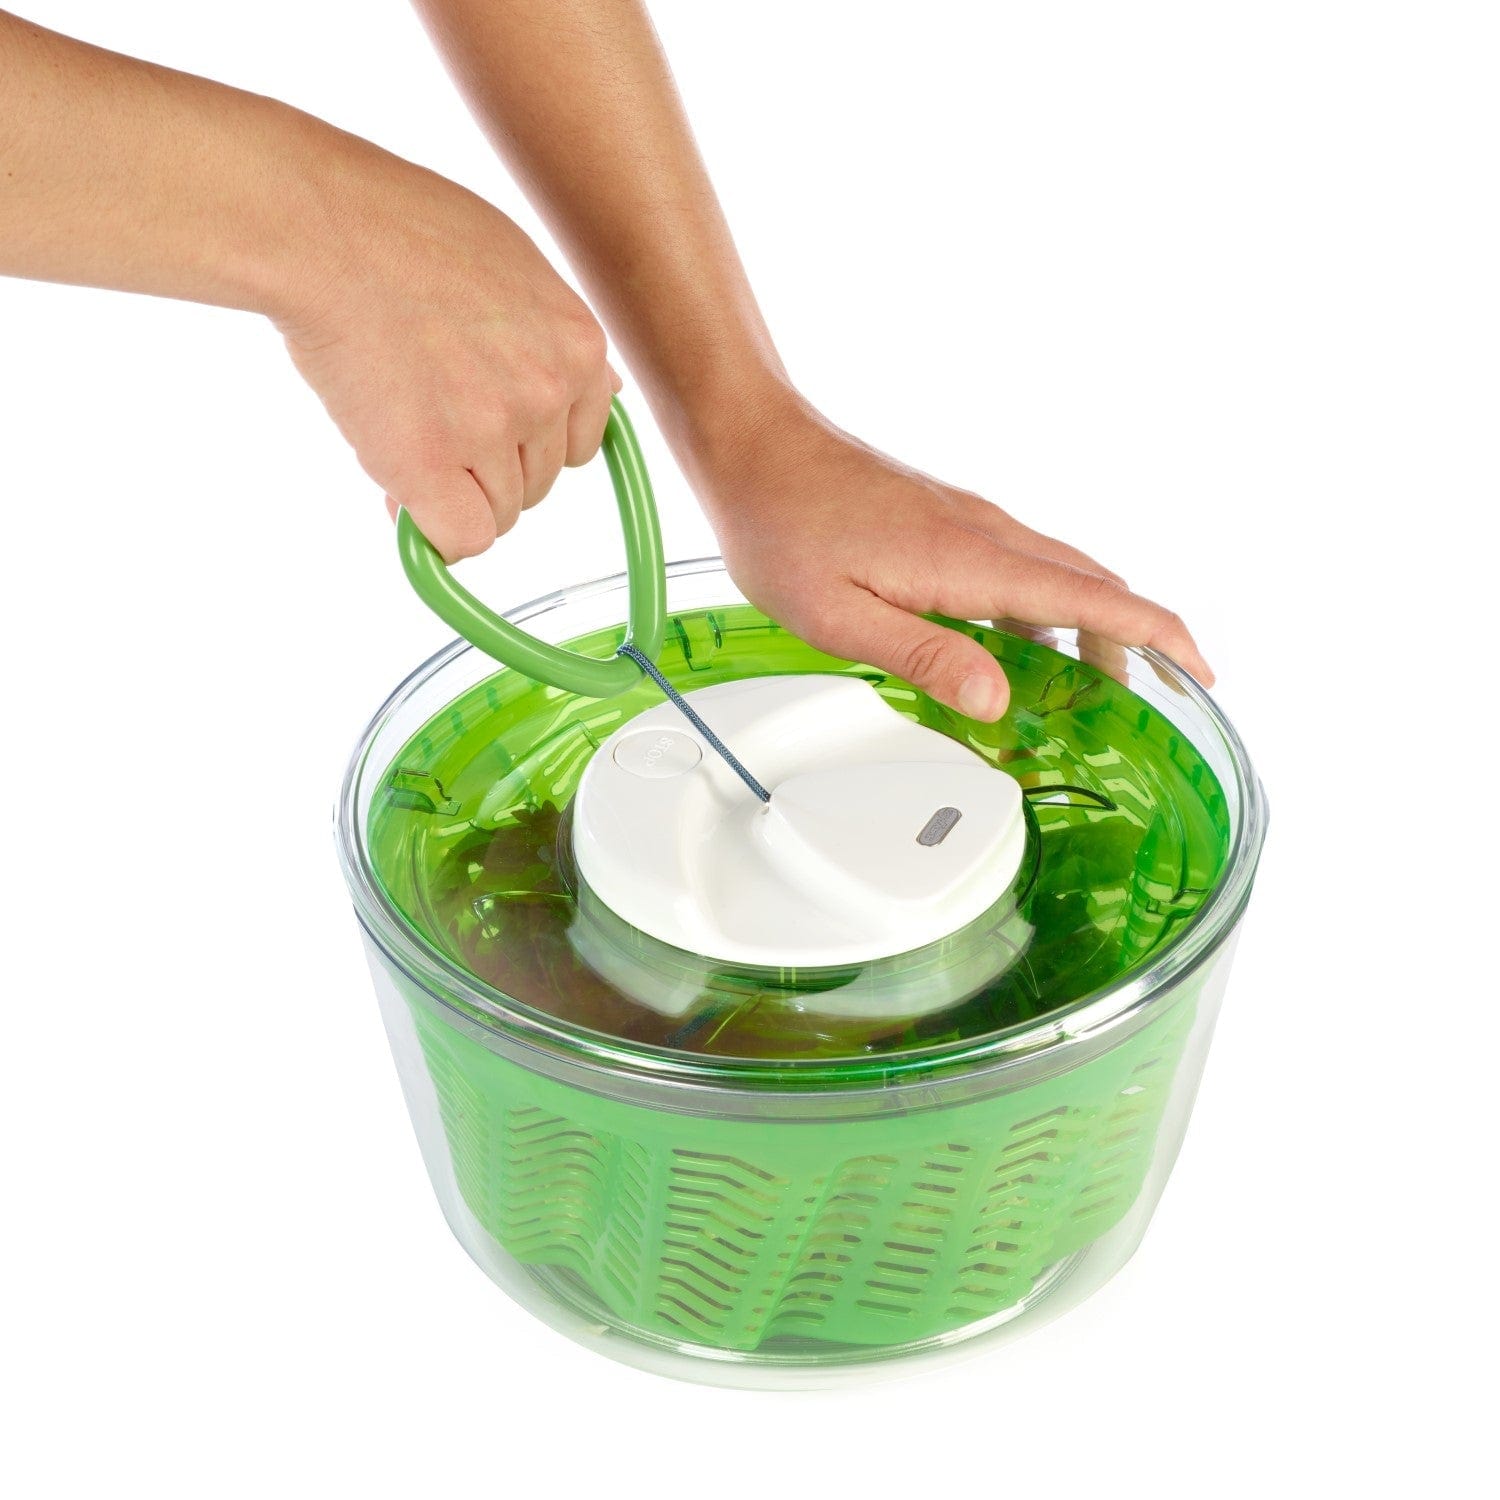 Easy Spin 2 Aquavent Salad Spinner